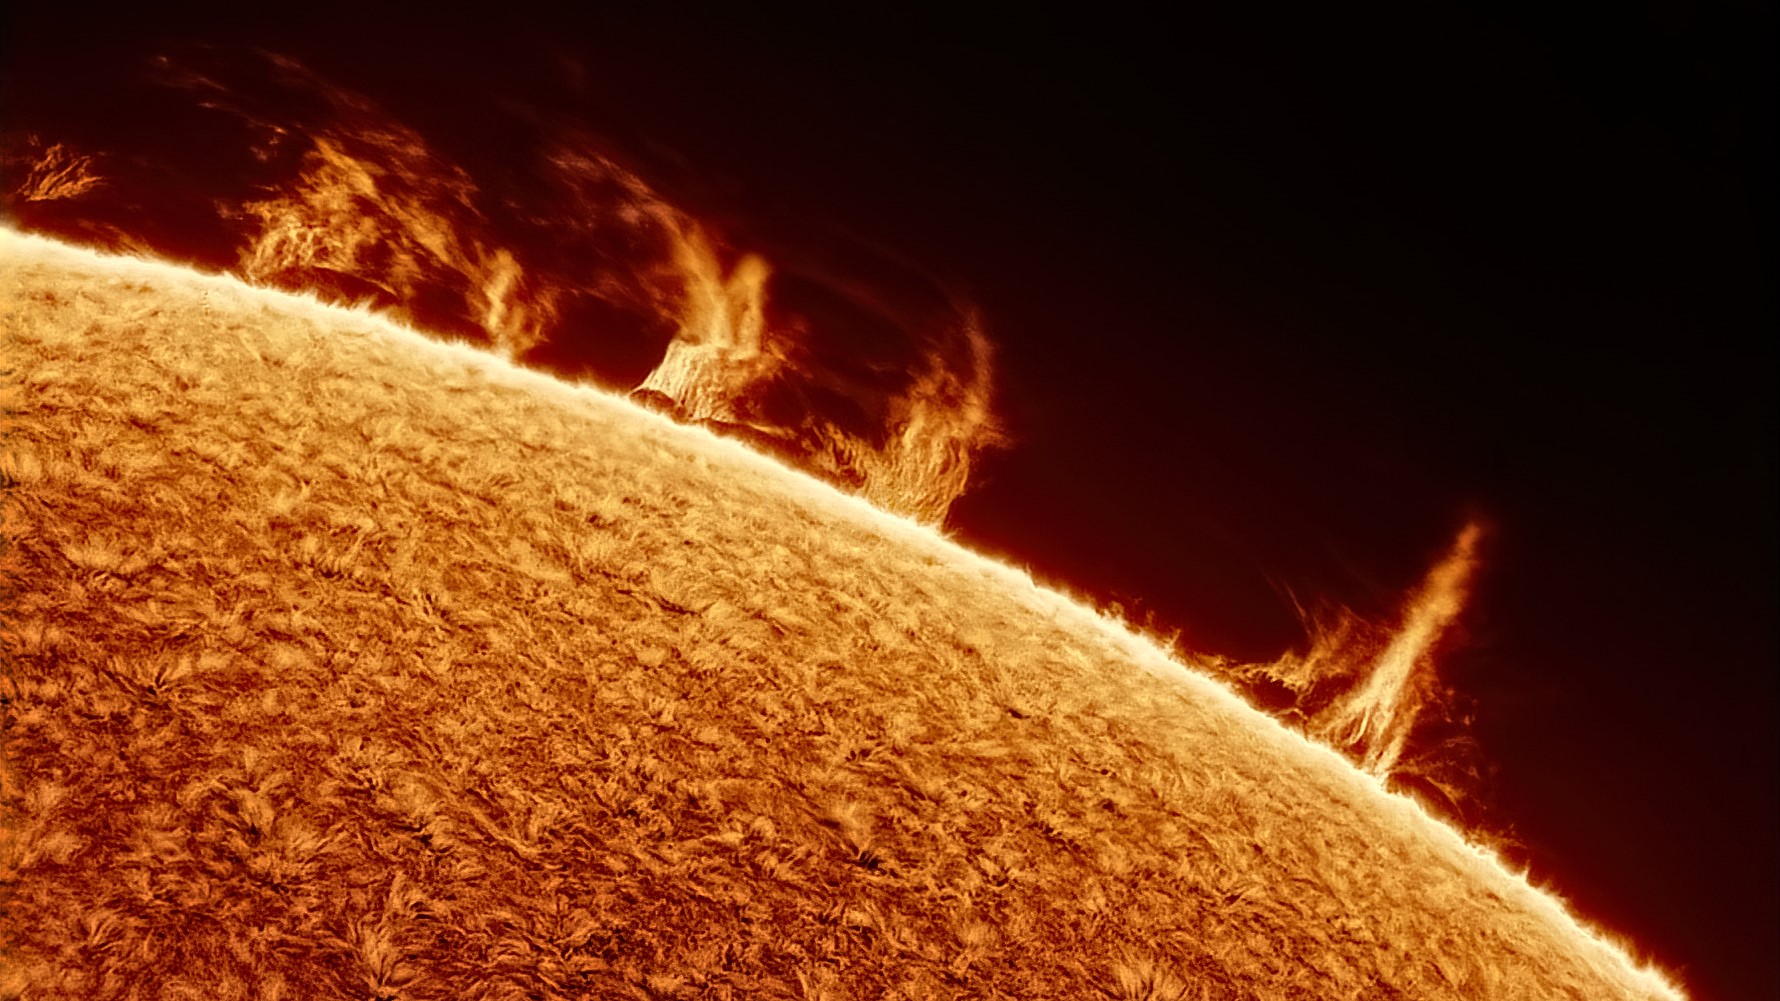  Astrophotographer captures stunningly detailed photos of our 'fuzzy' sun 